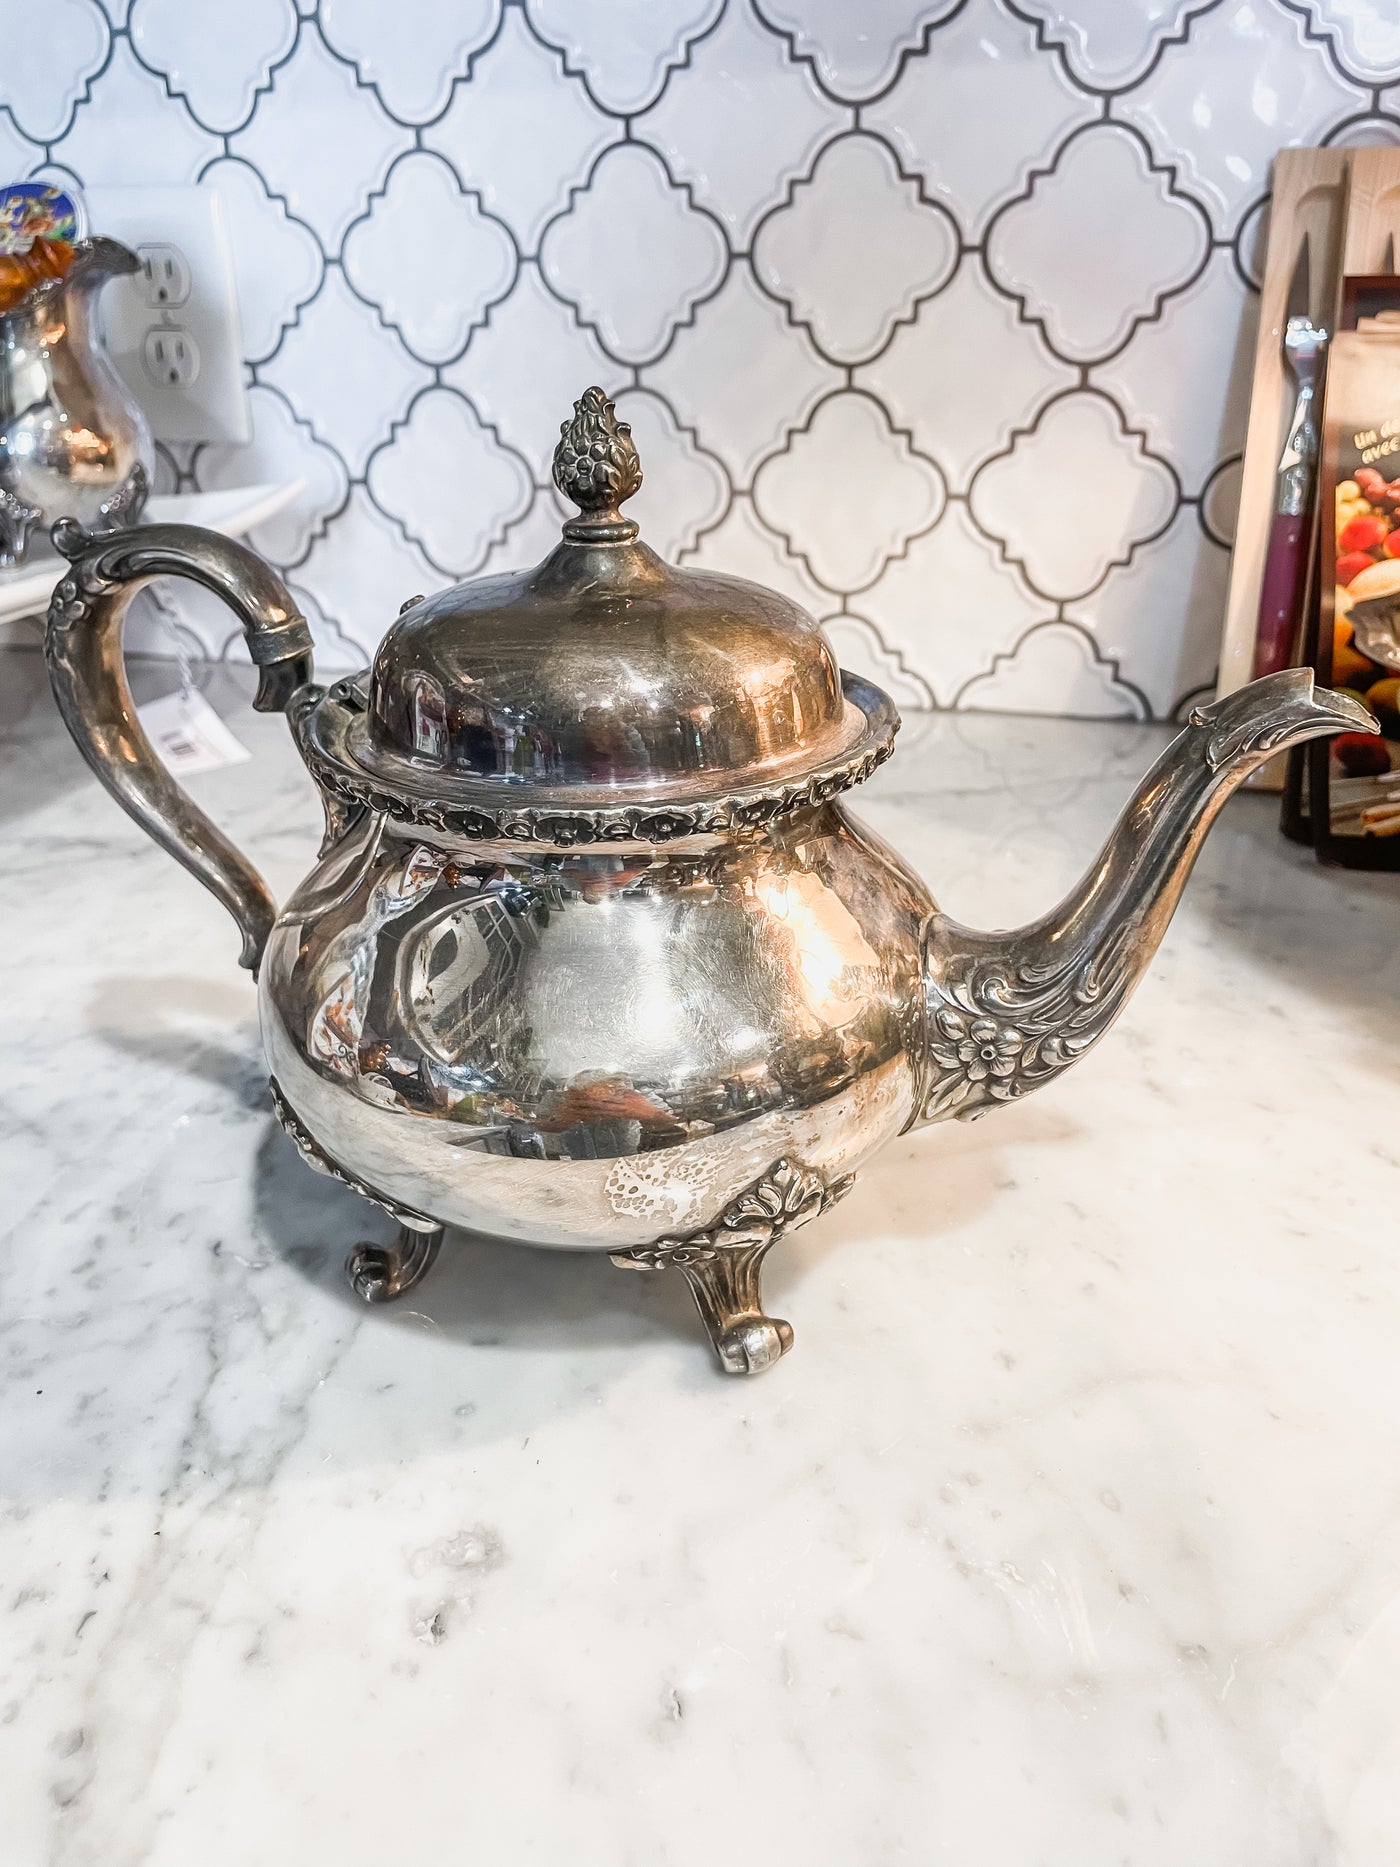 Wilcox International Silver Co. Teapot